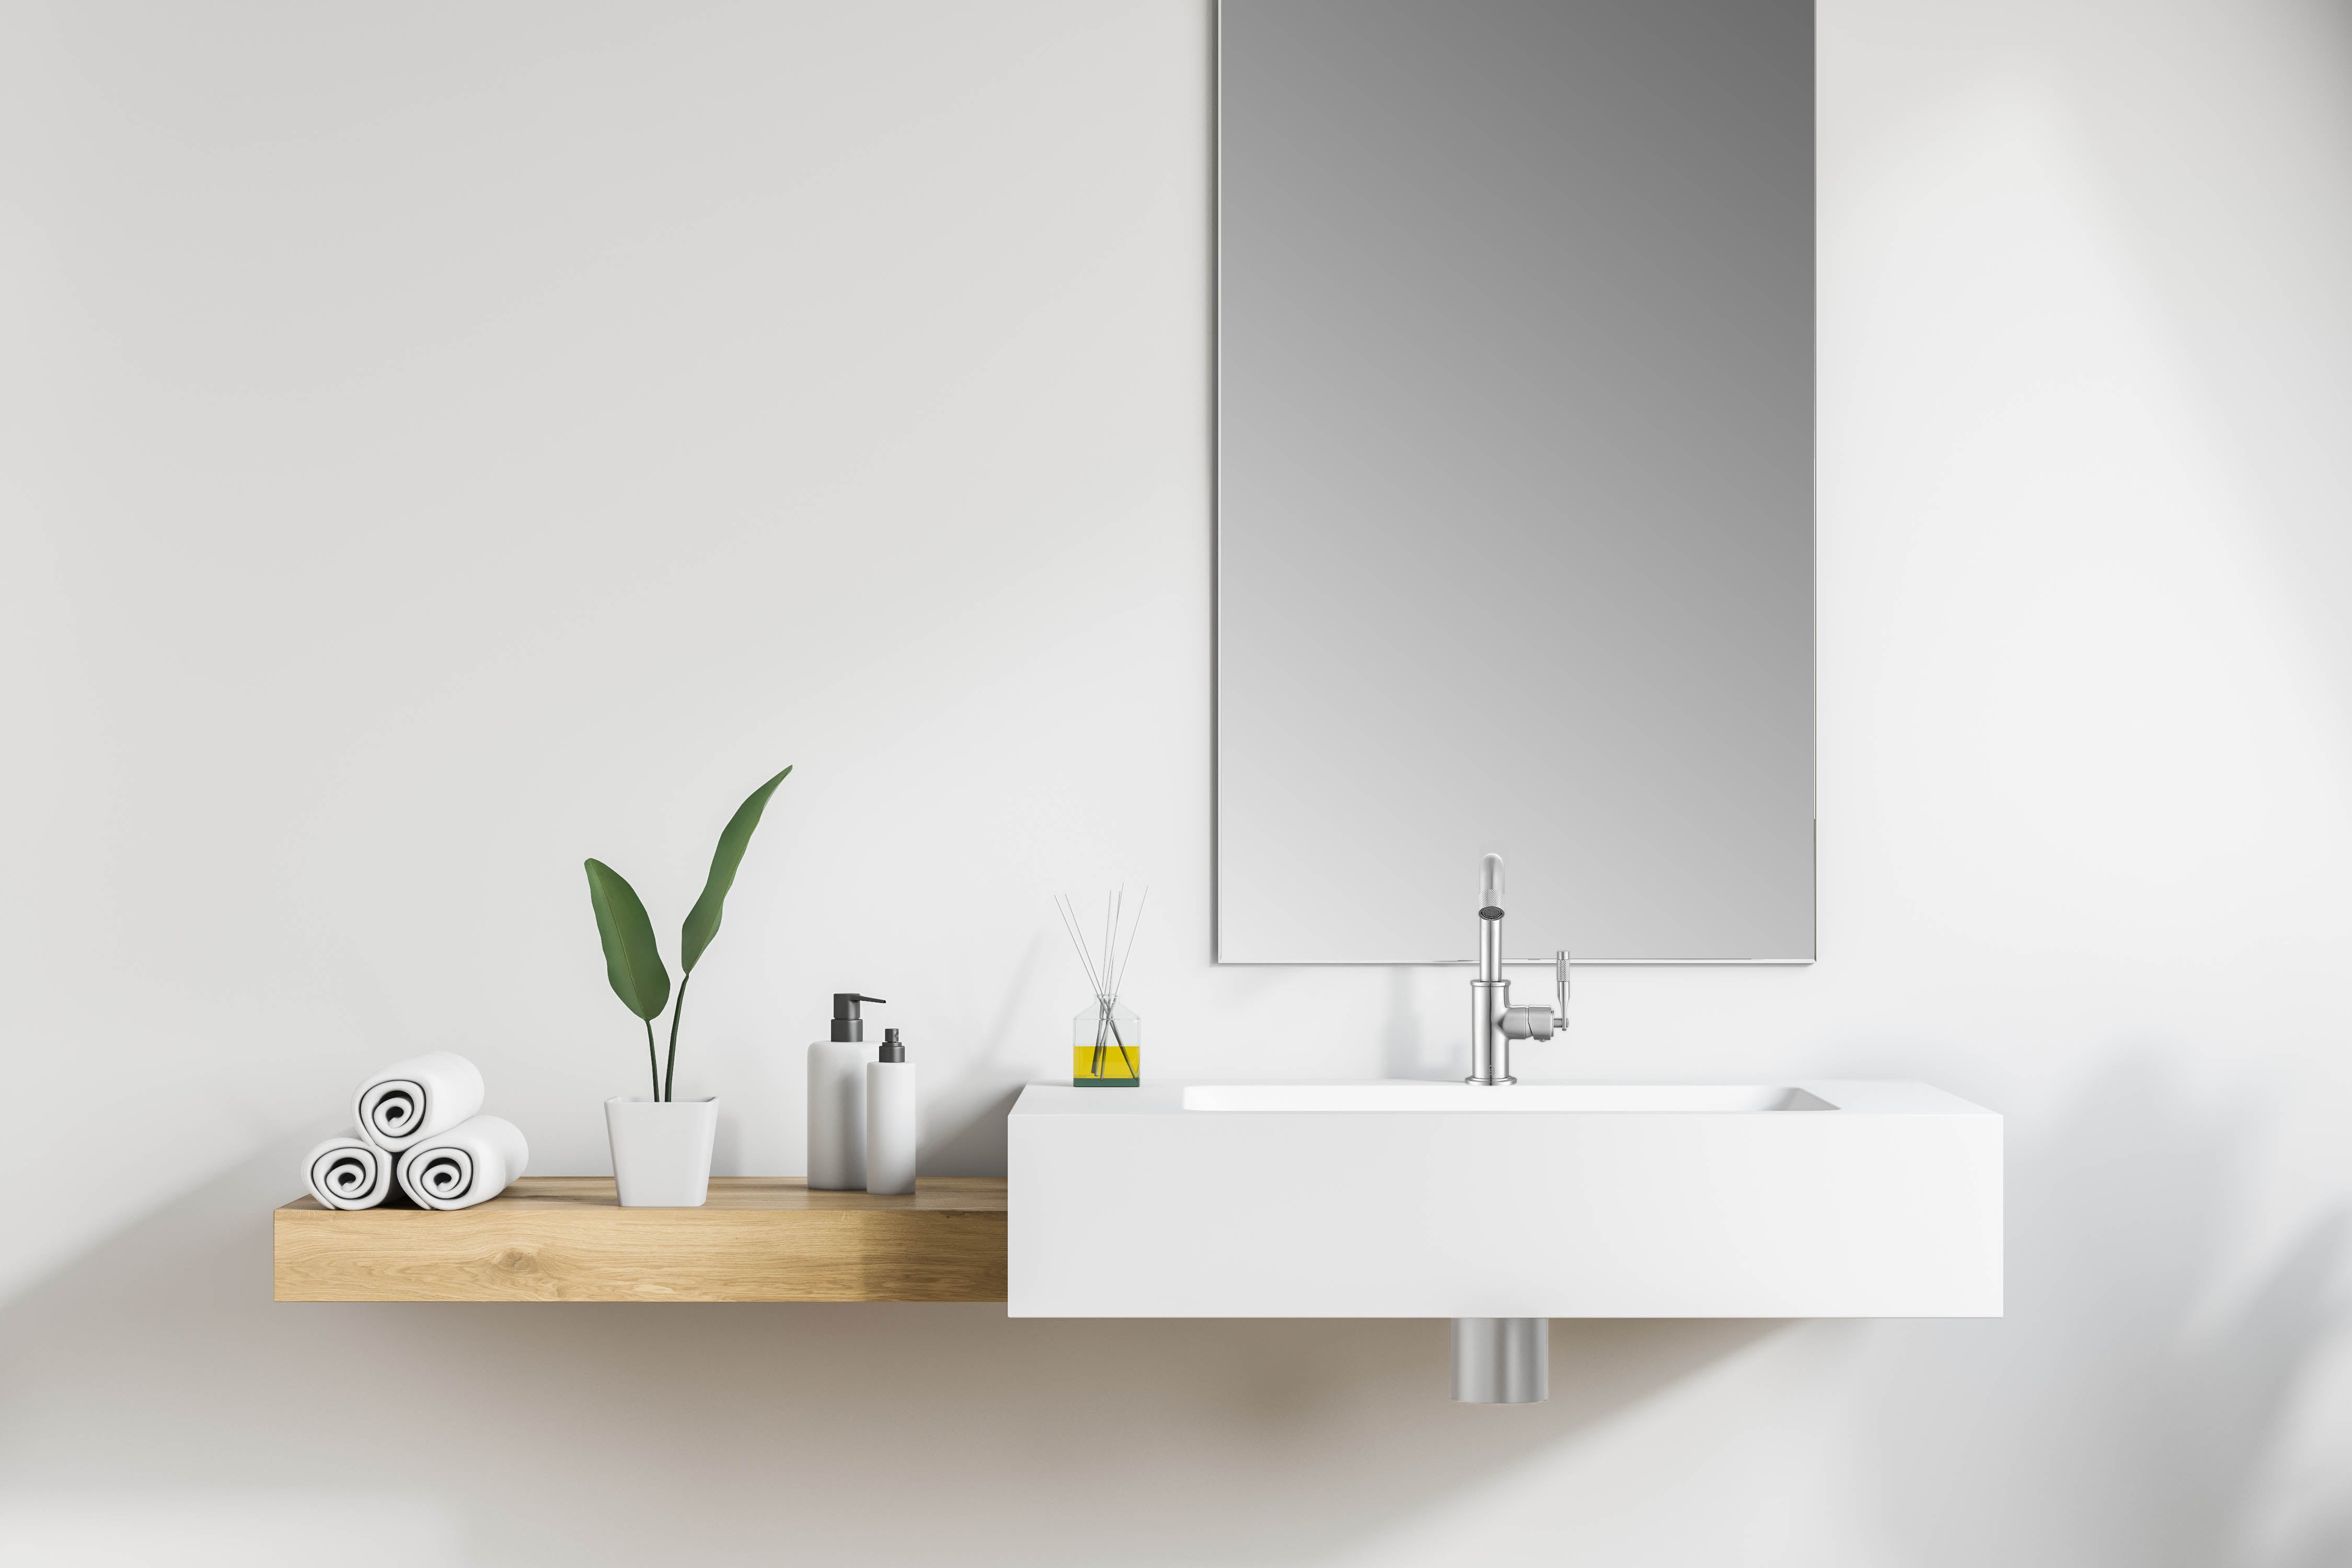 Ancona Industria Series Single Lever Bathroom Faucet in Brushed Nickel